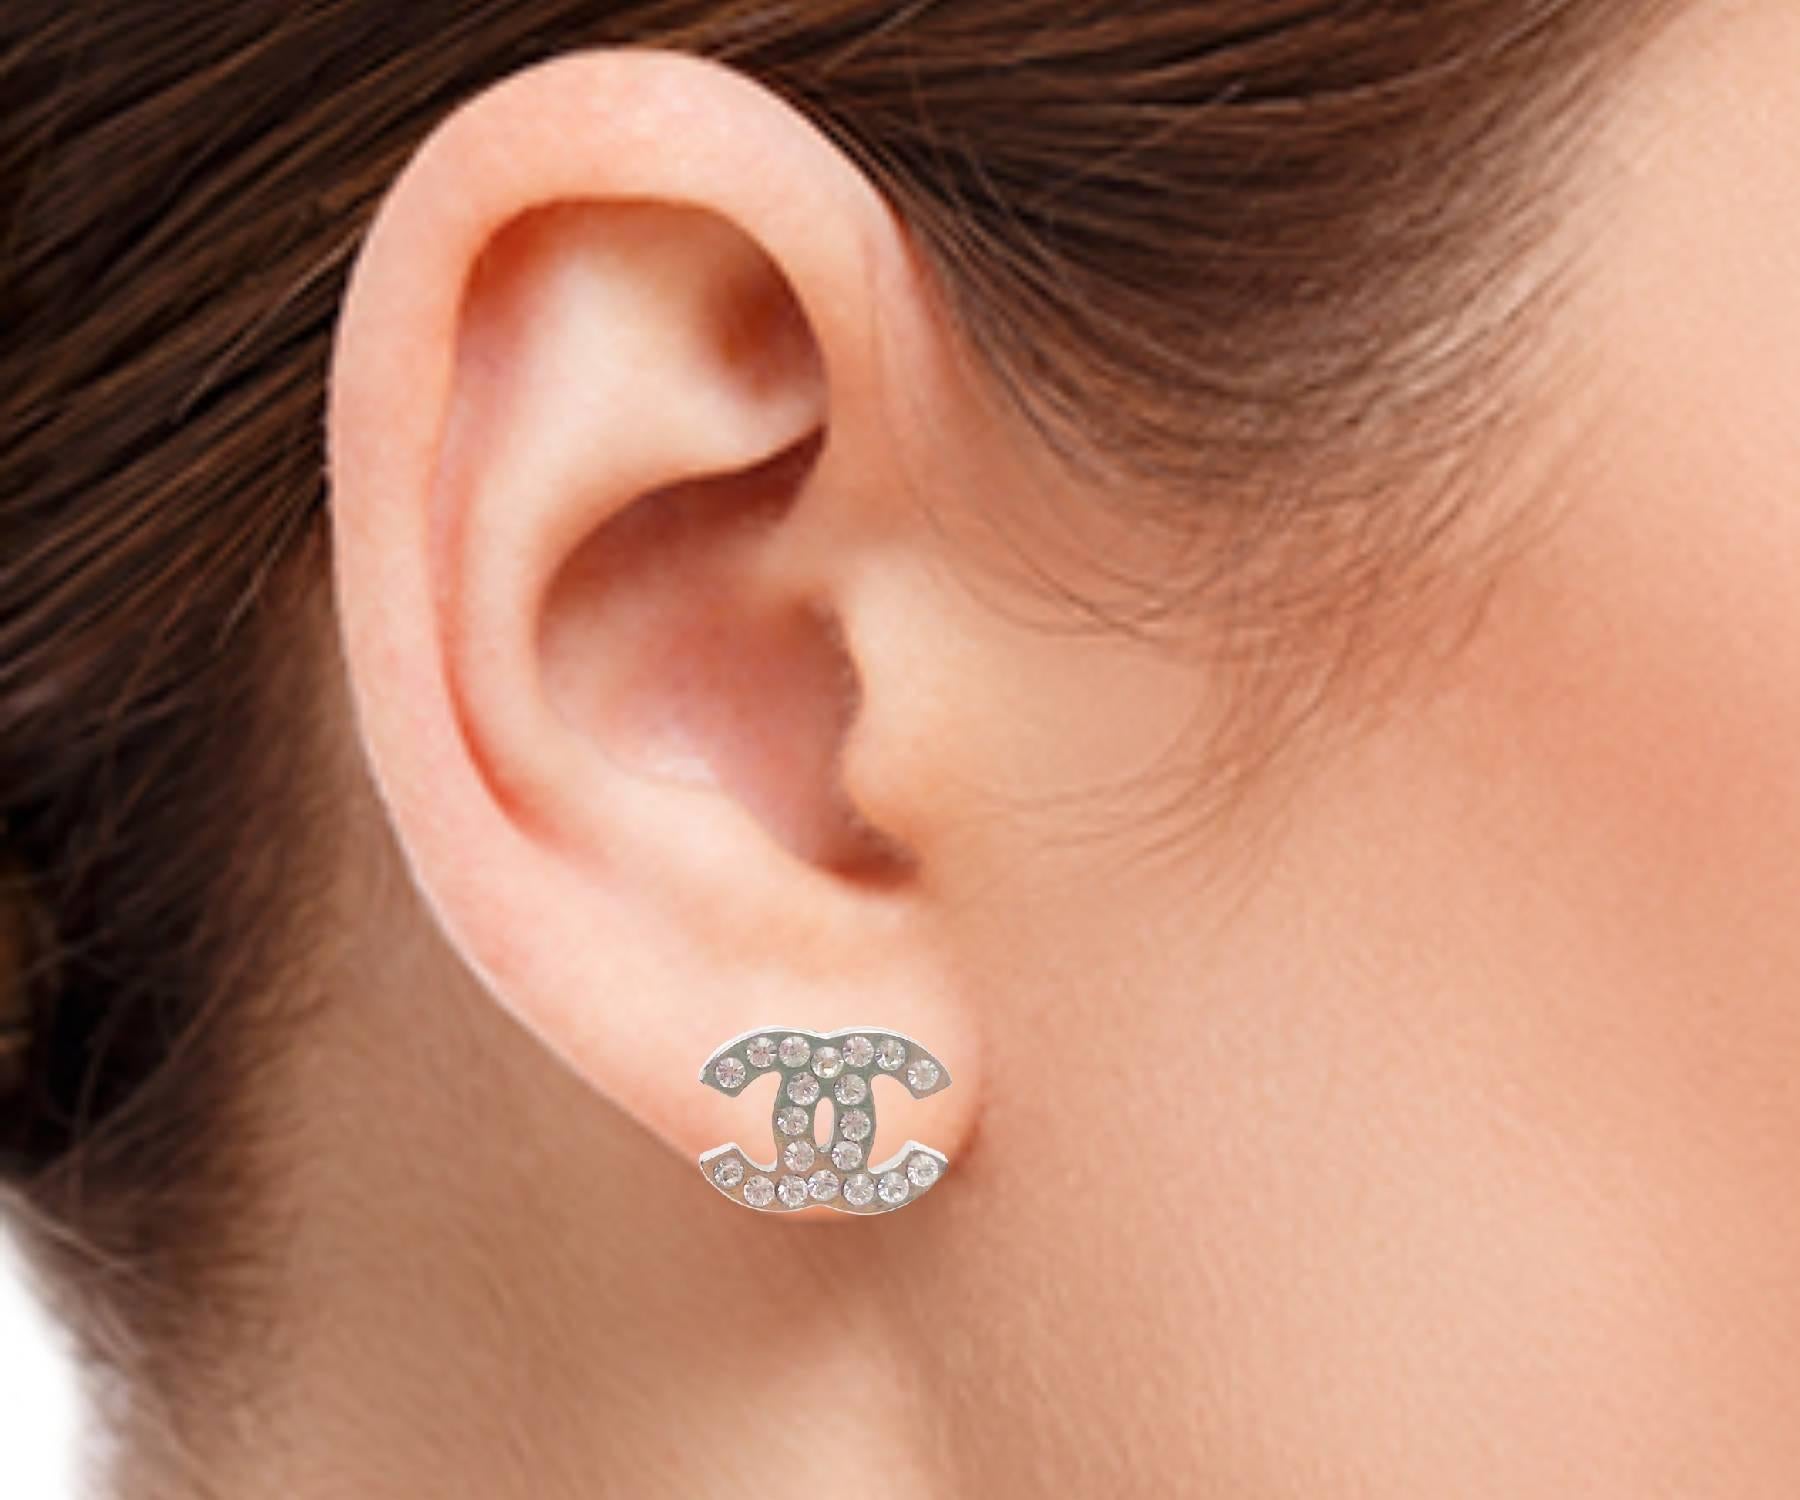 chanel cc earrings price